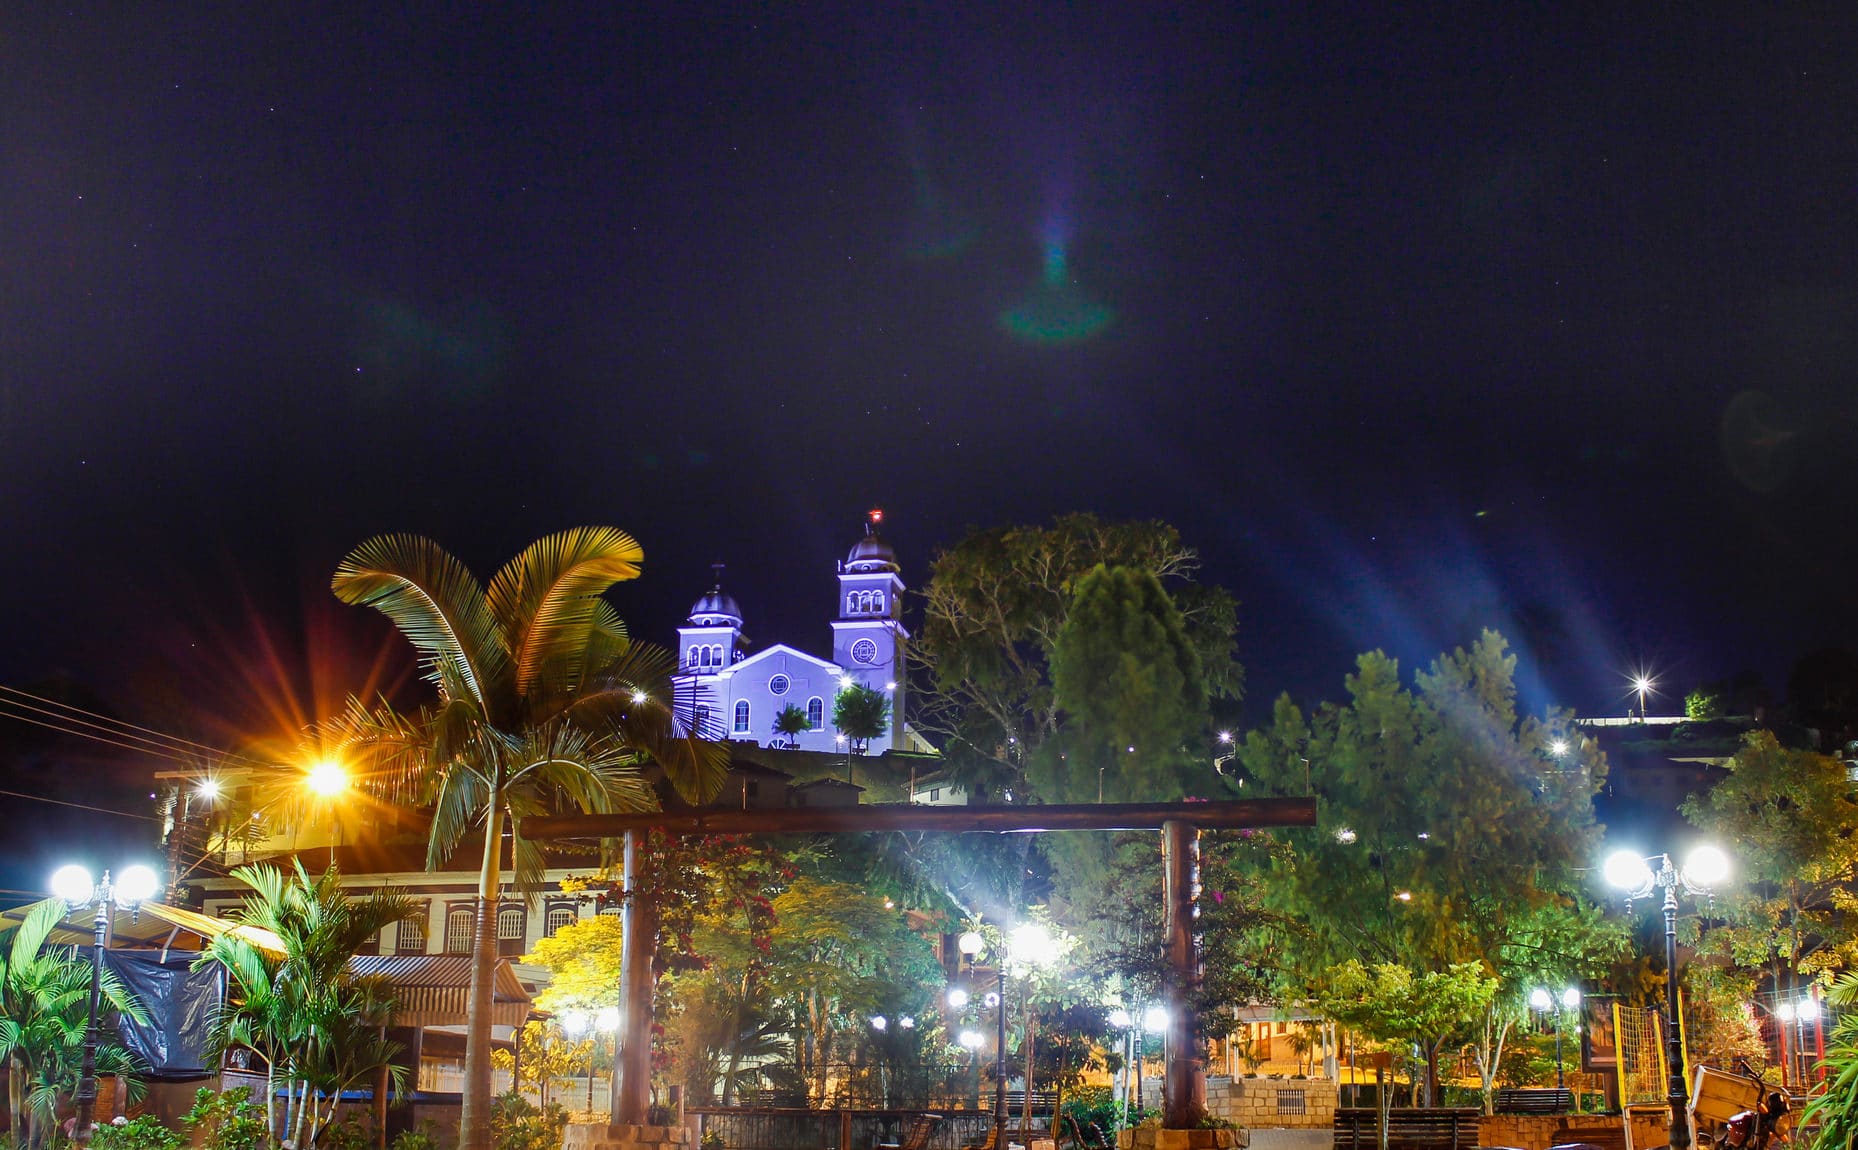 Praça central, vista noturna.